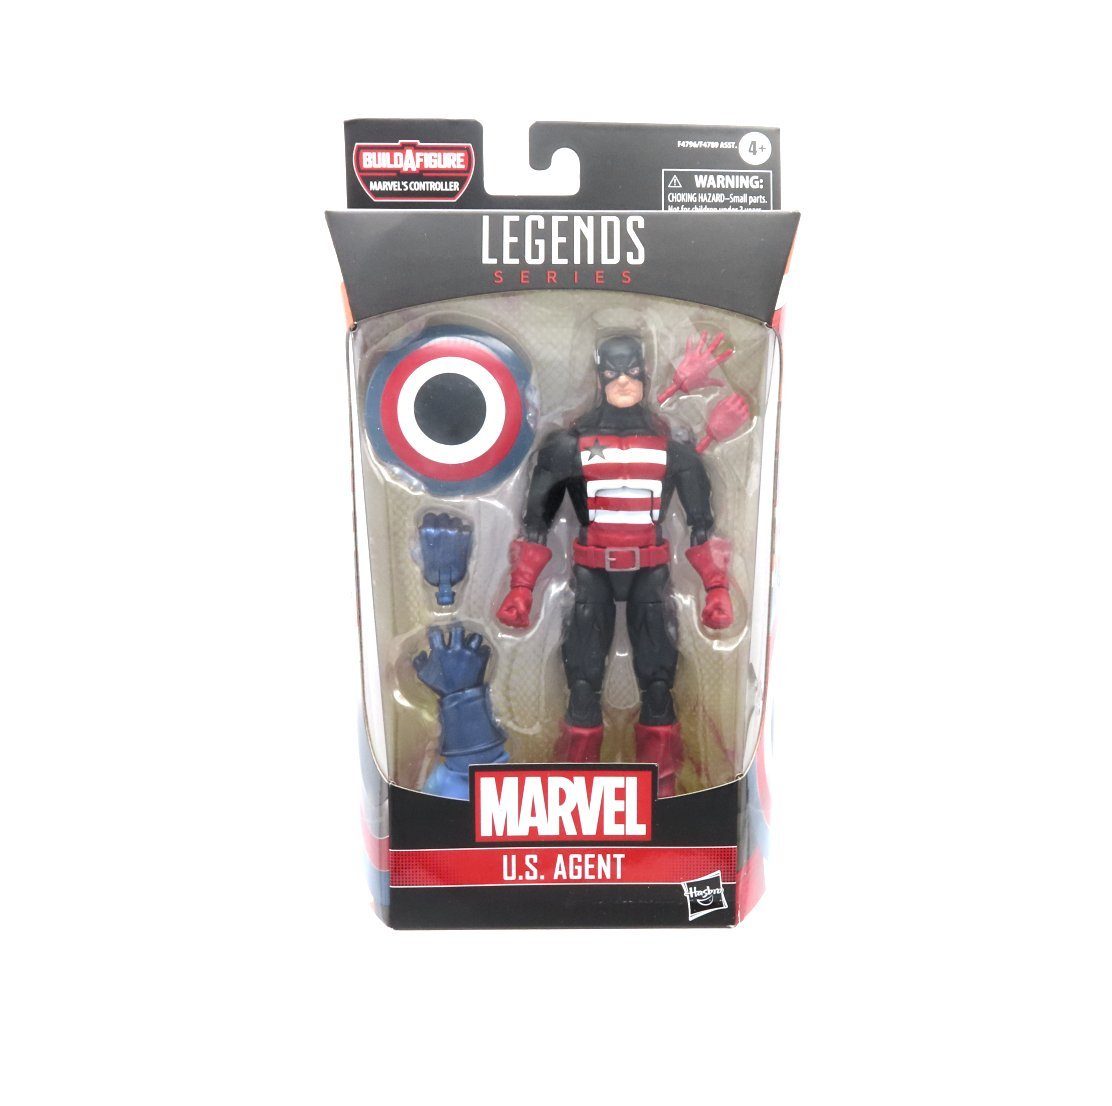 große U.S. Marvel cm Hasbro Comicfigur Action-Figur 15 Agent Legends Series